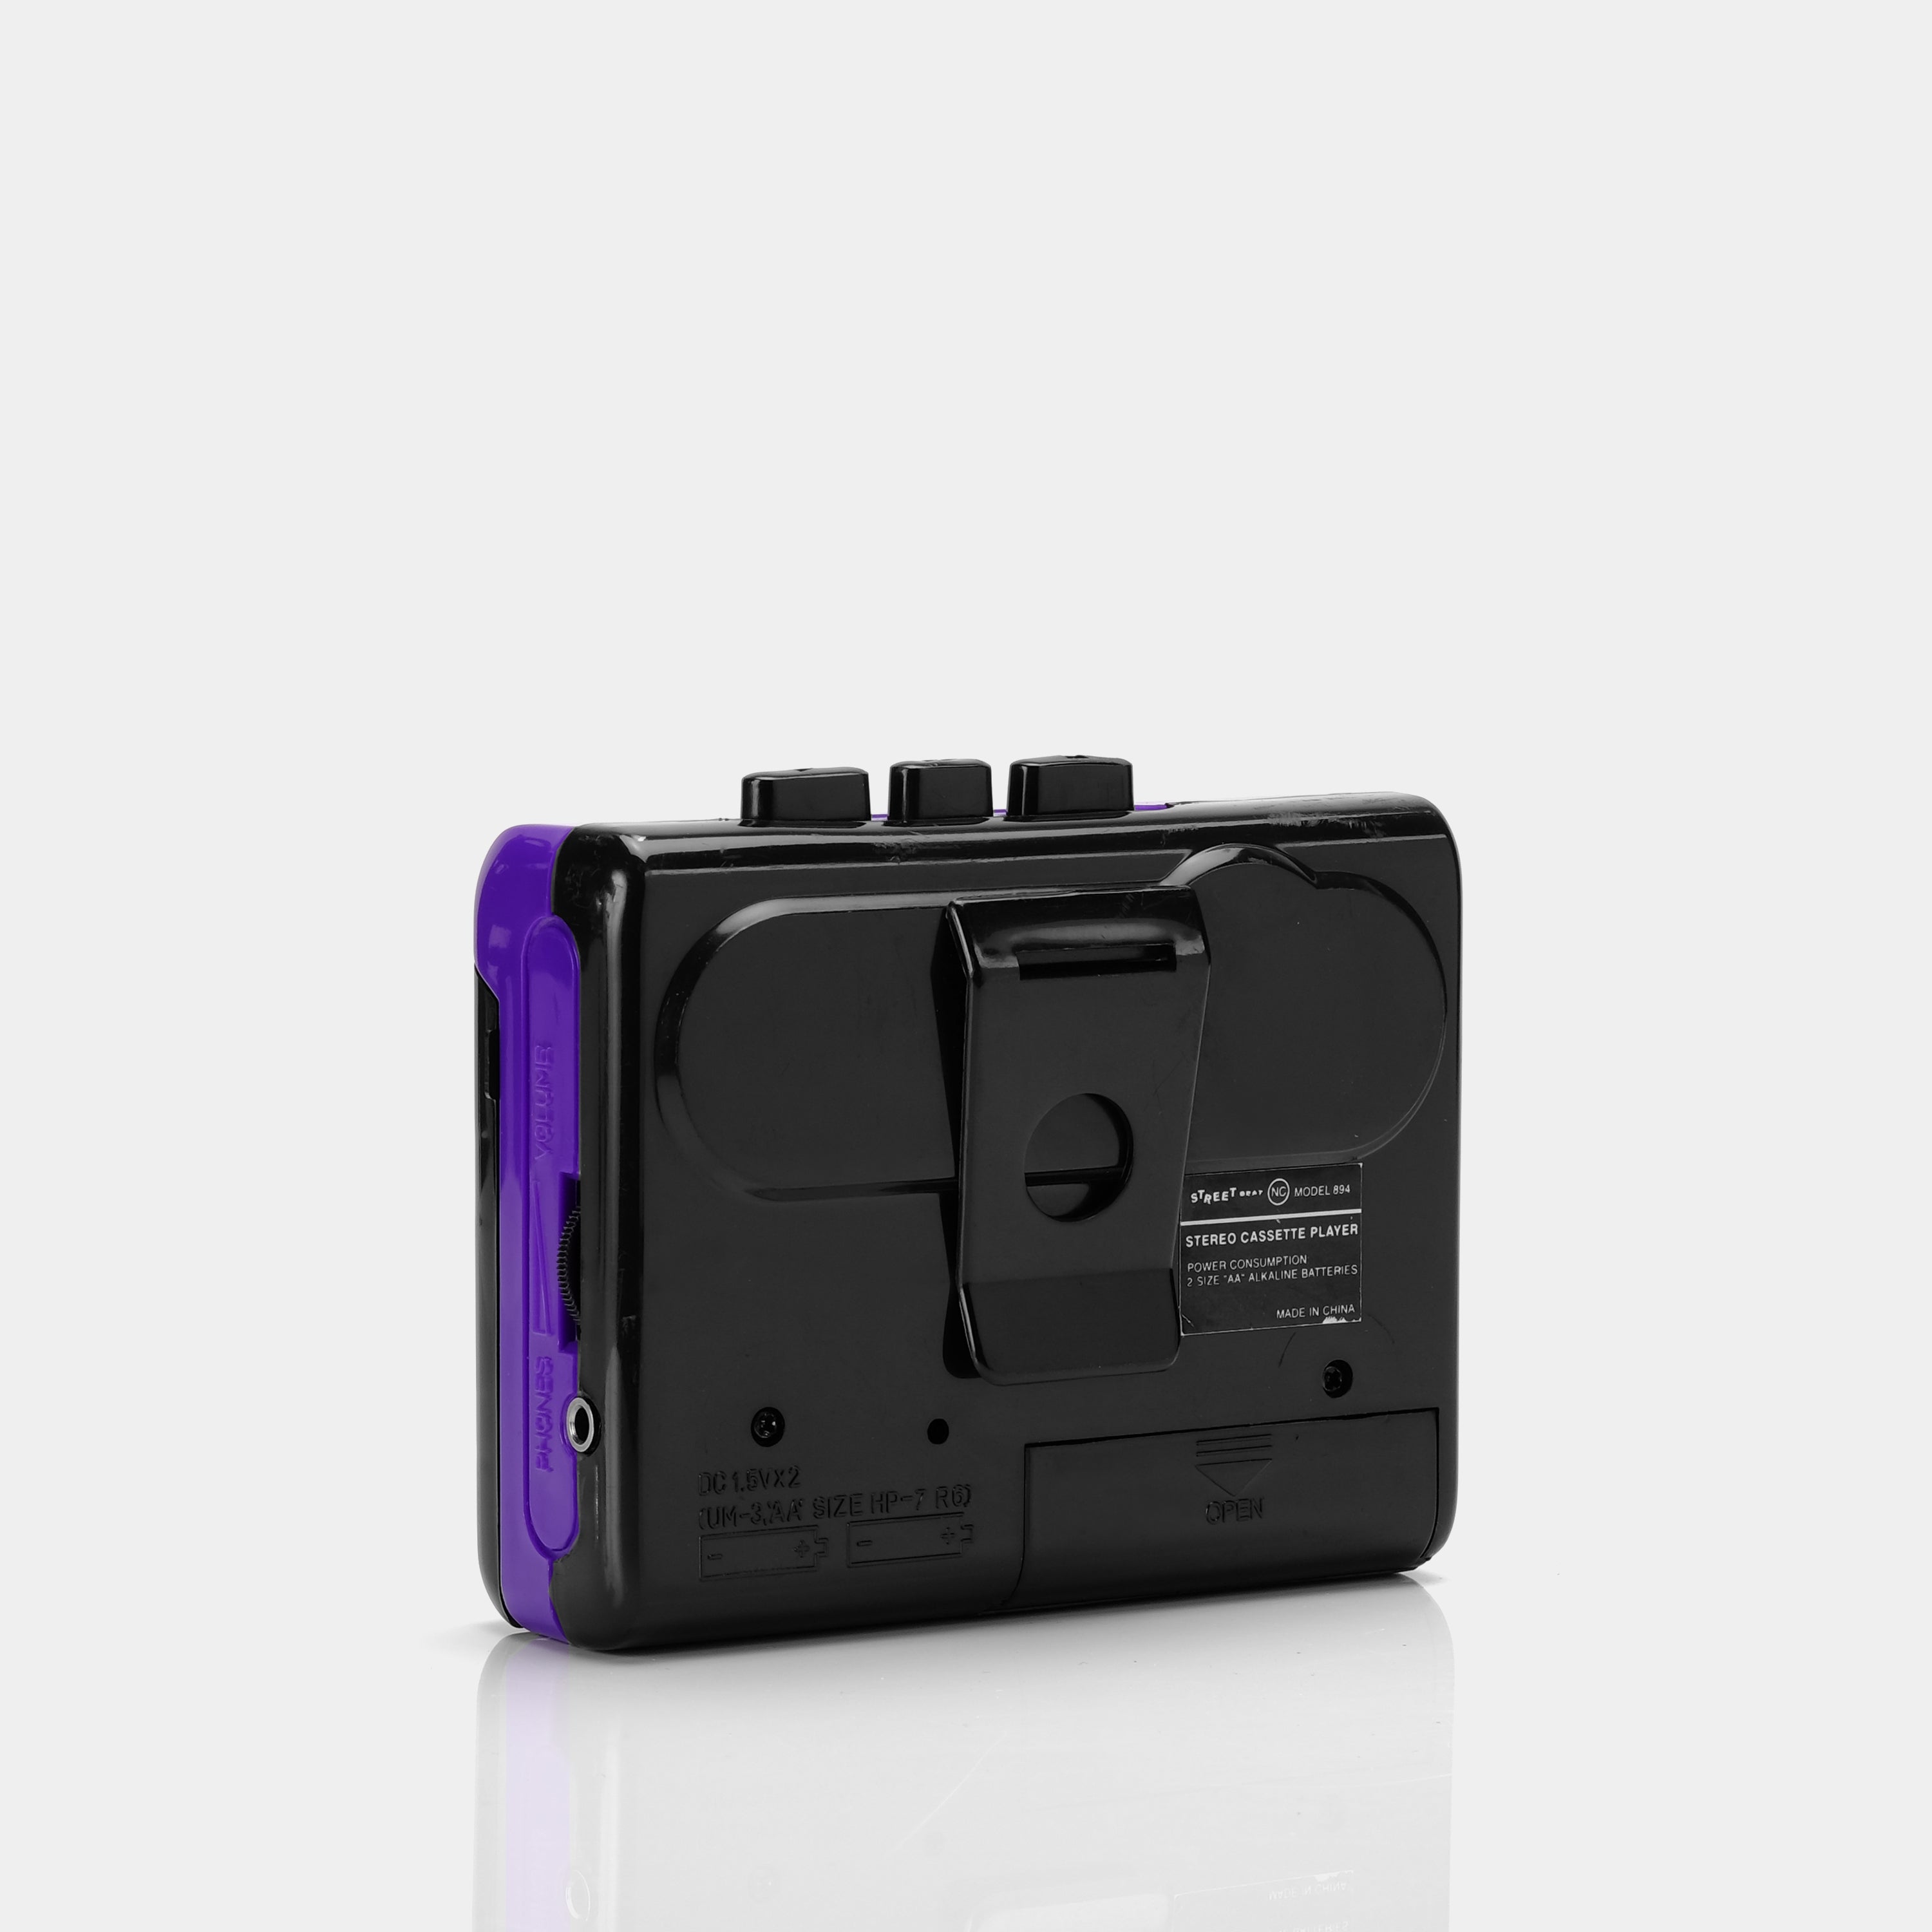 Street Beat Purple Portable Cassette Player